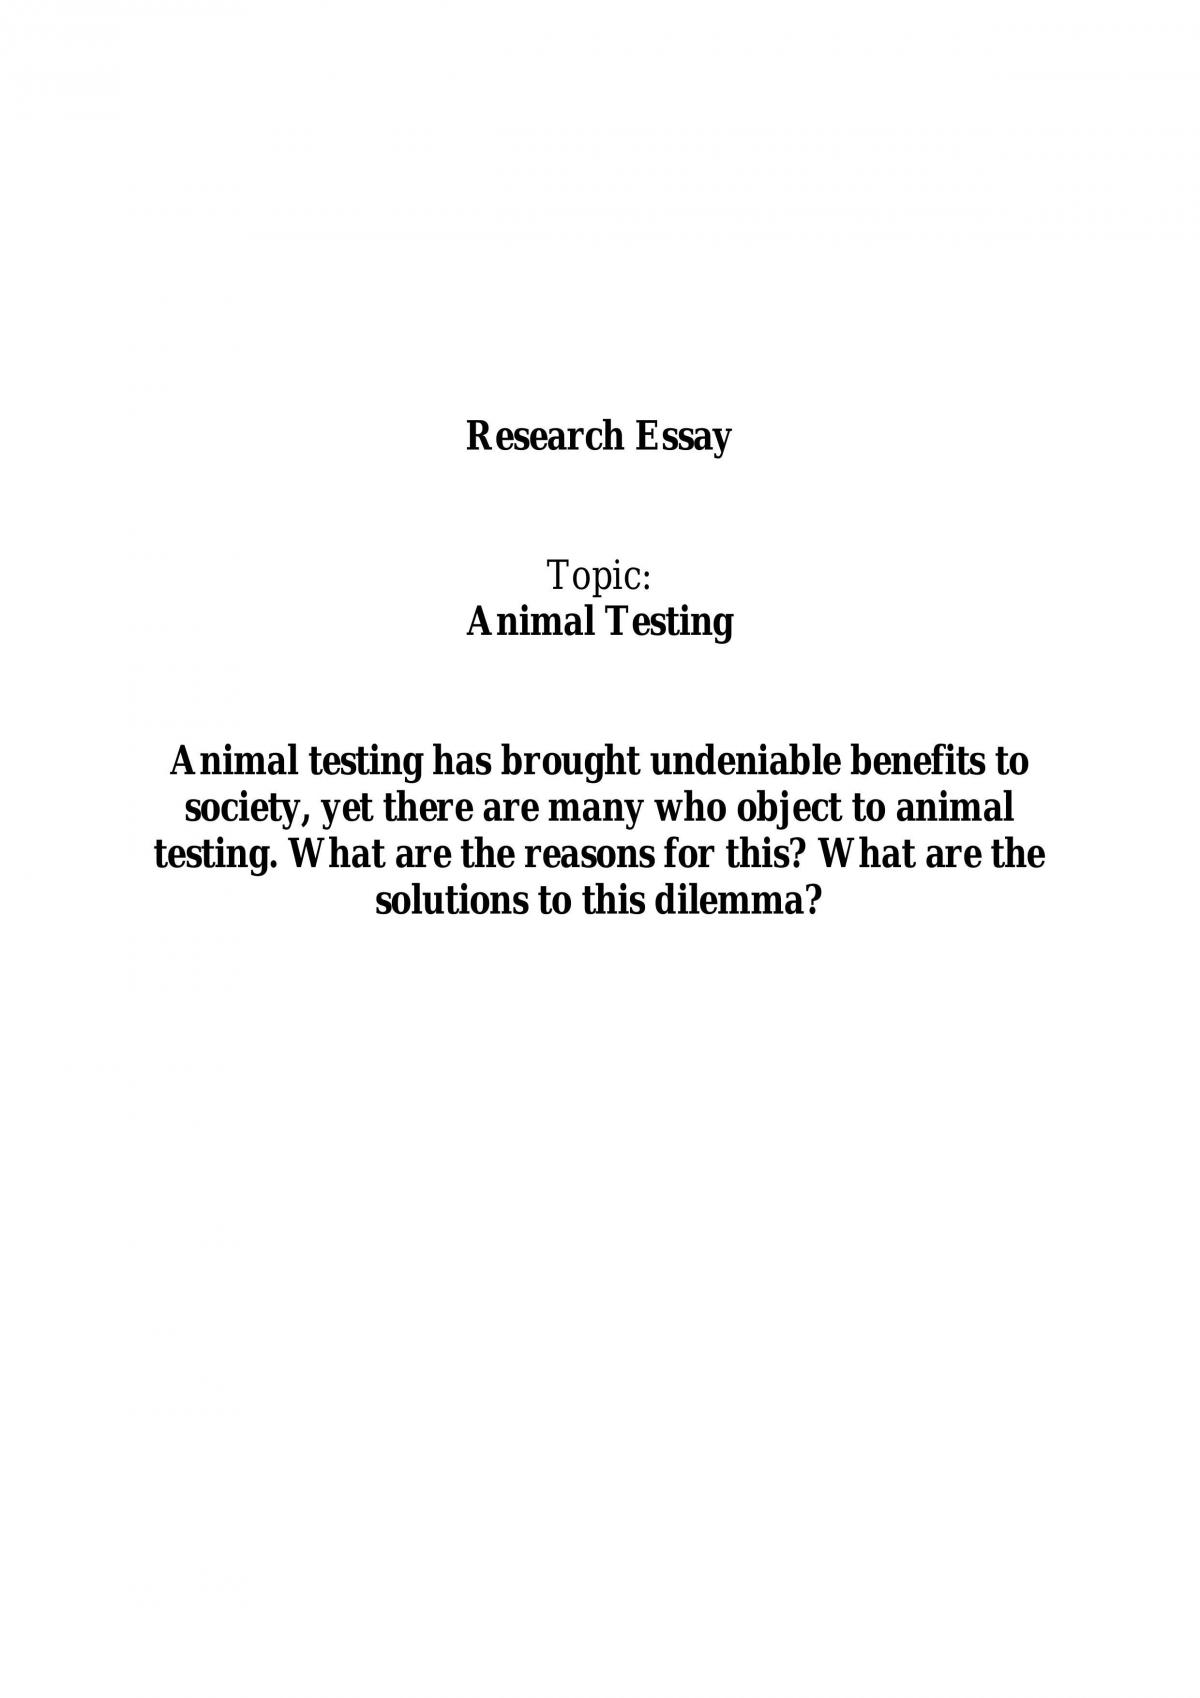 animal testing argumentative essay questions